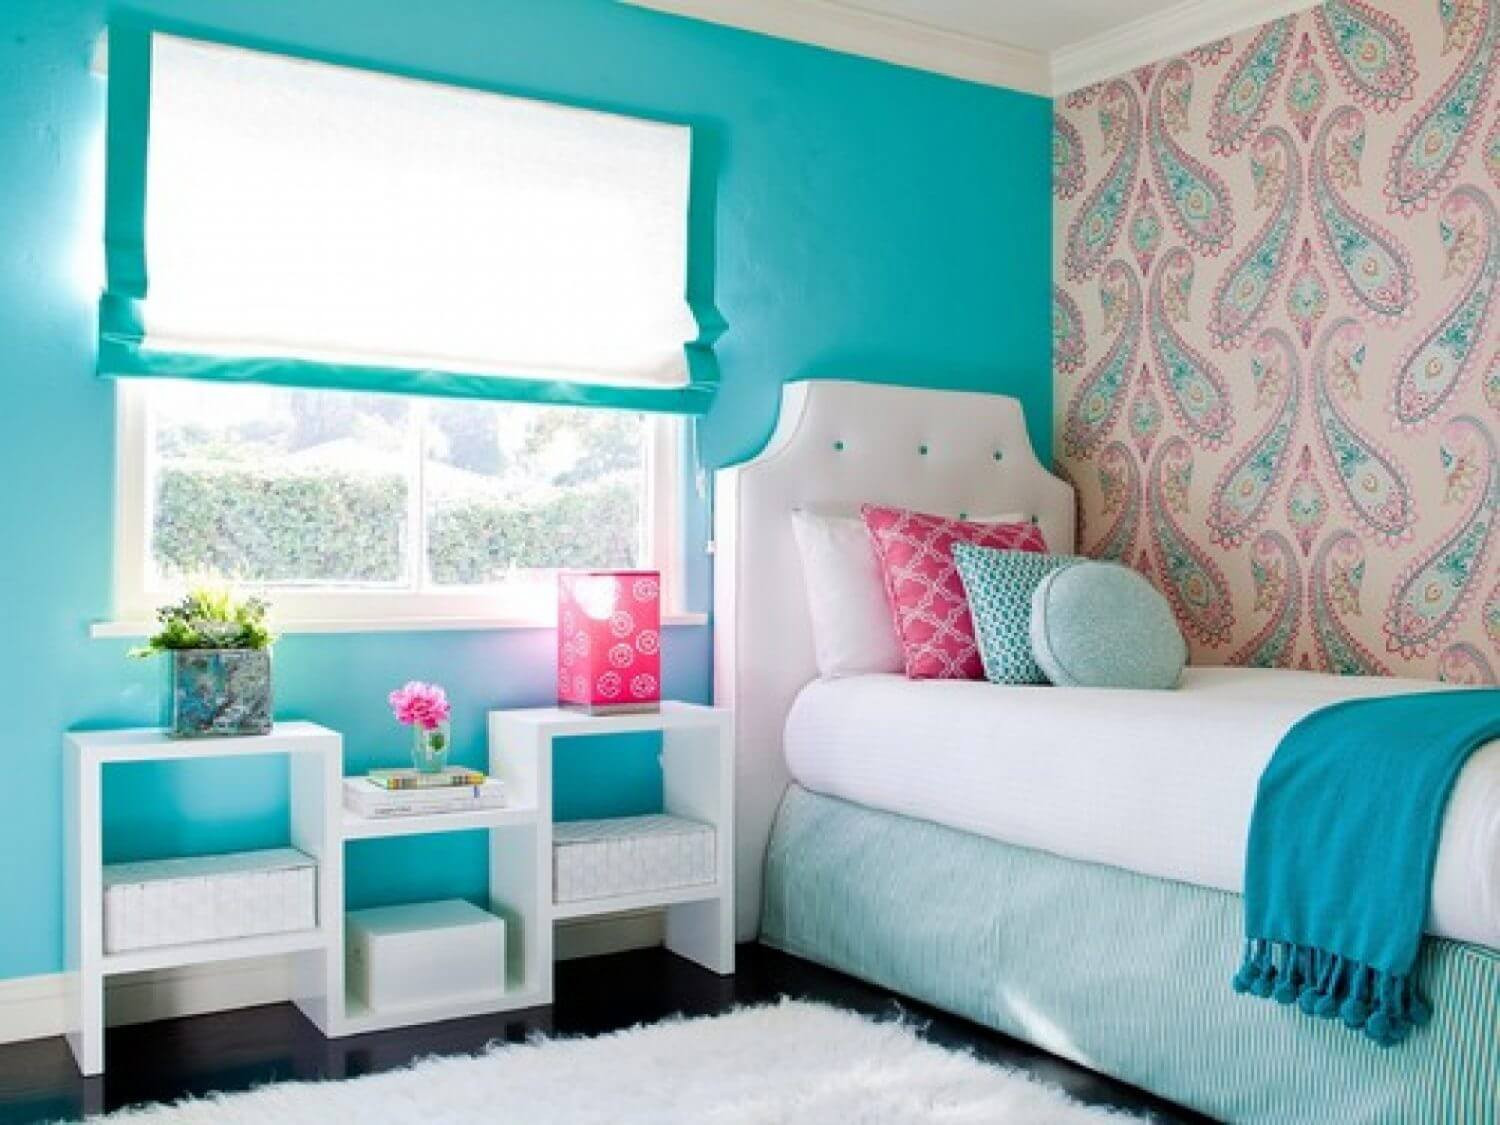 Girls Bedroom Painting Ideas
 Top 10 Girls Bedroom Paint Ideas 2017 TheyDesign